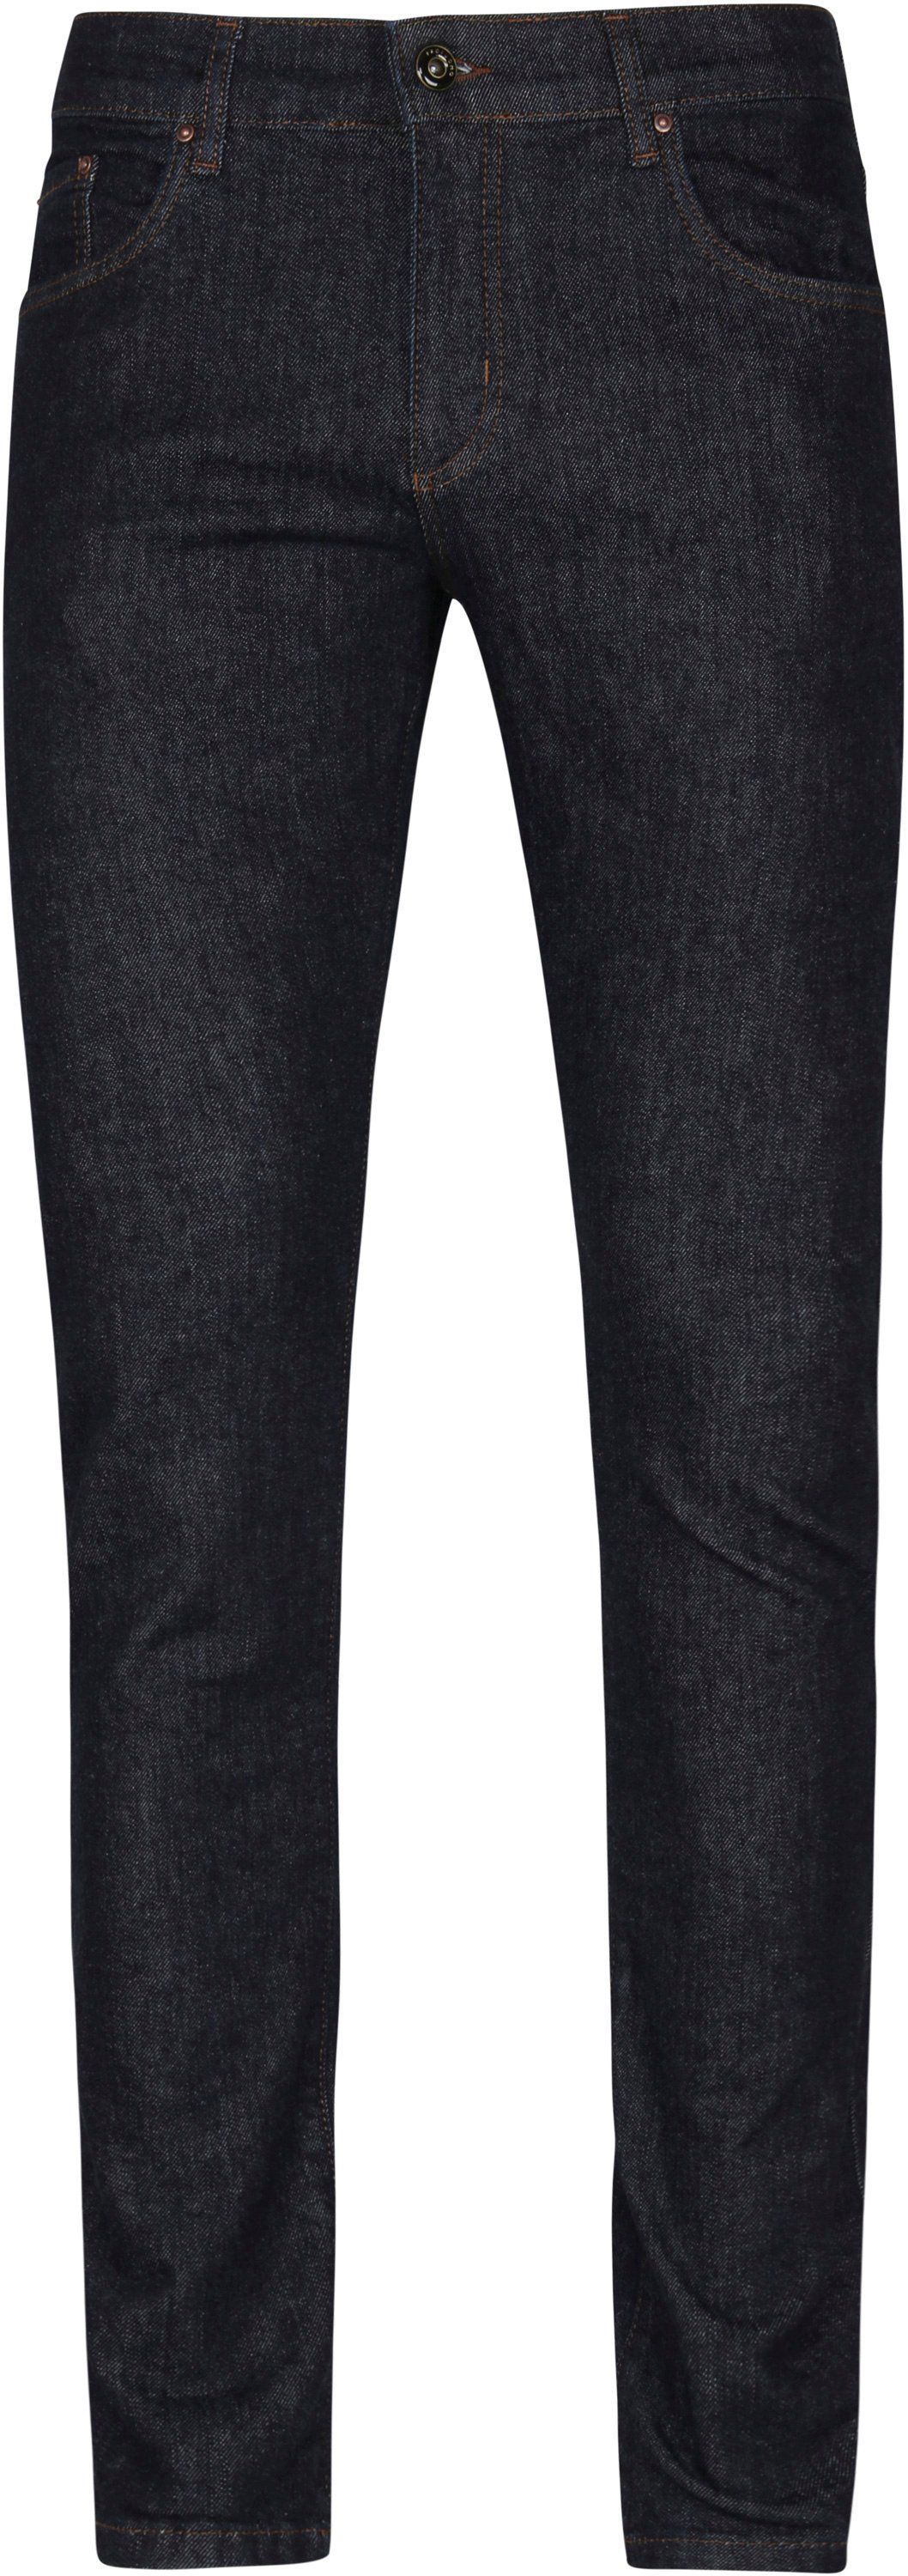 Profuomo Detox Denim Jeans Dark Blue Dark Blue size 31